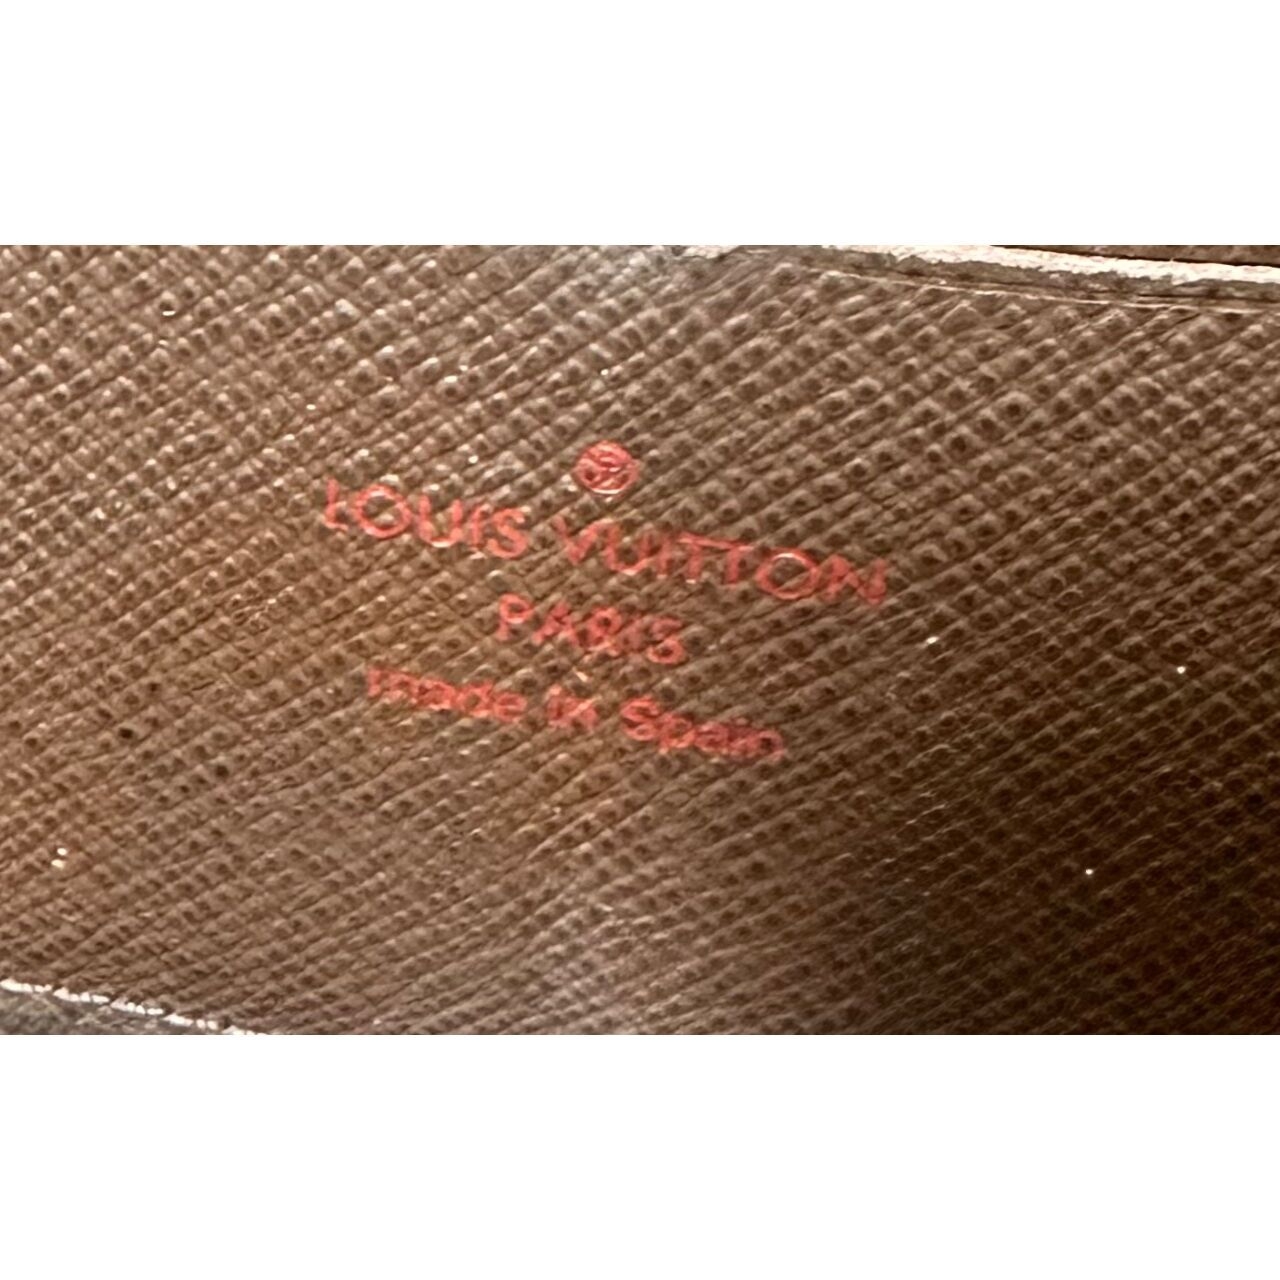 Louis Vuitton Damier Long Wallet